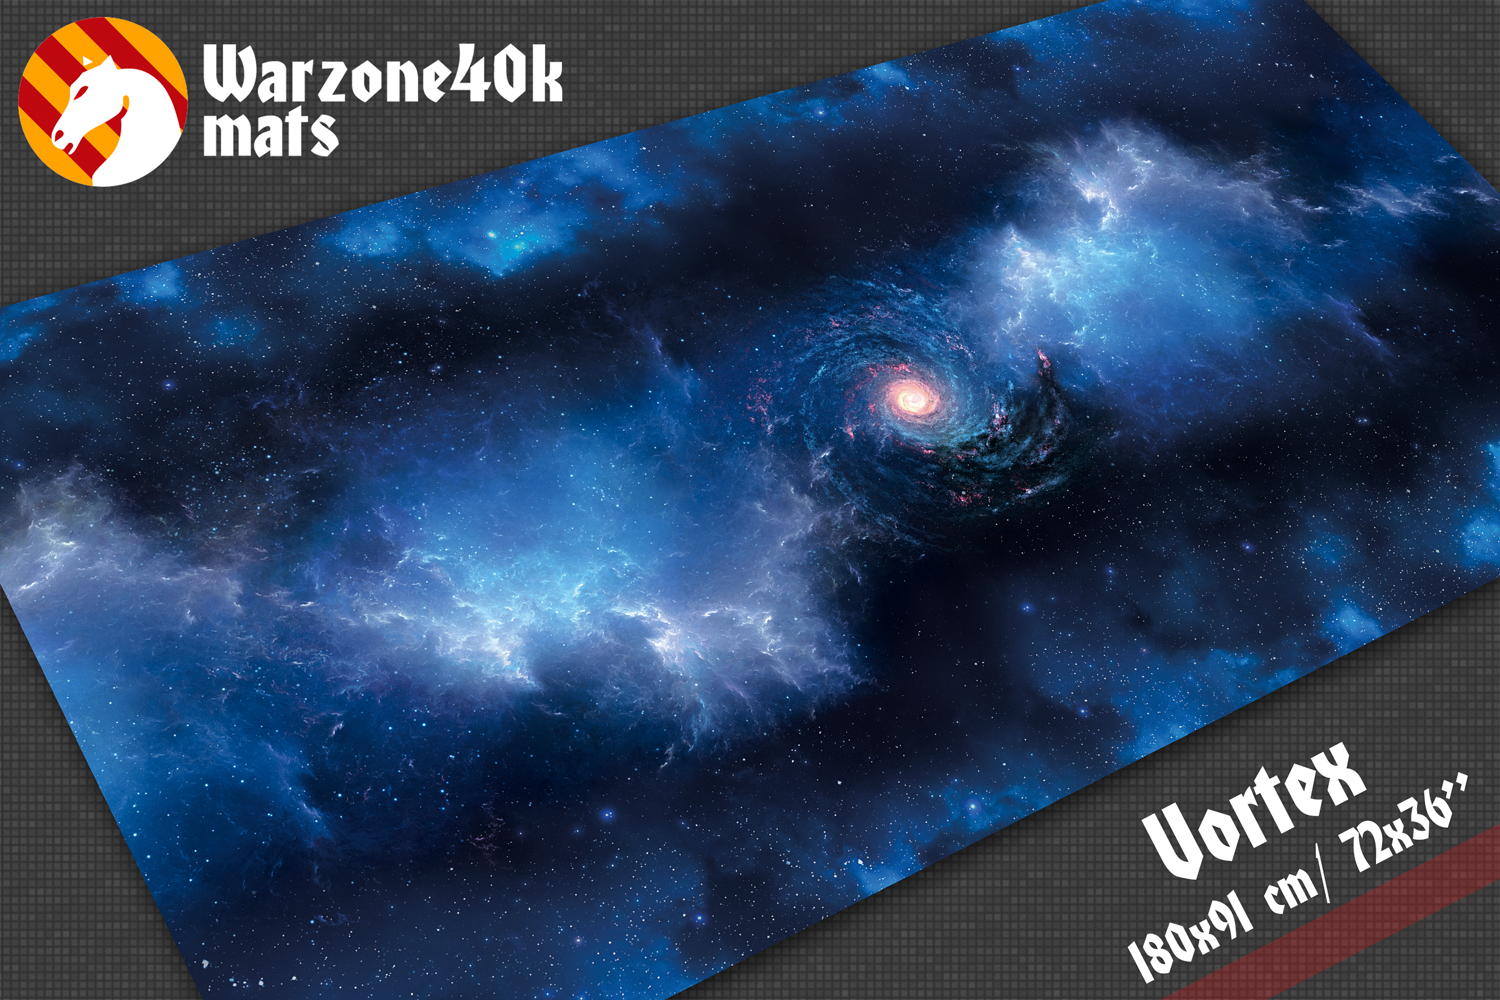 Star Wars game mat “Vortex” by Warzone Studio + coupon